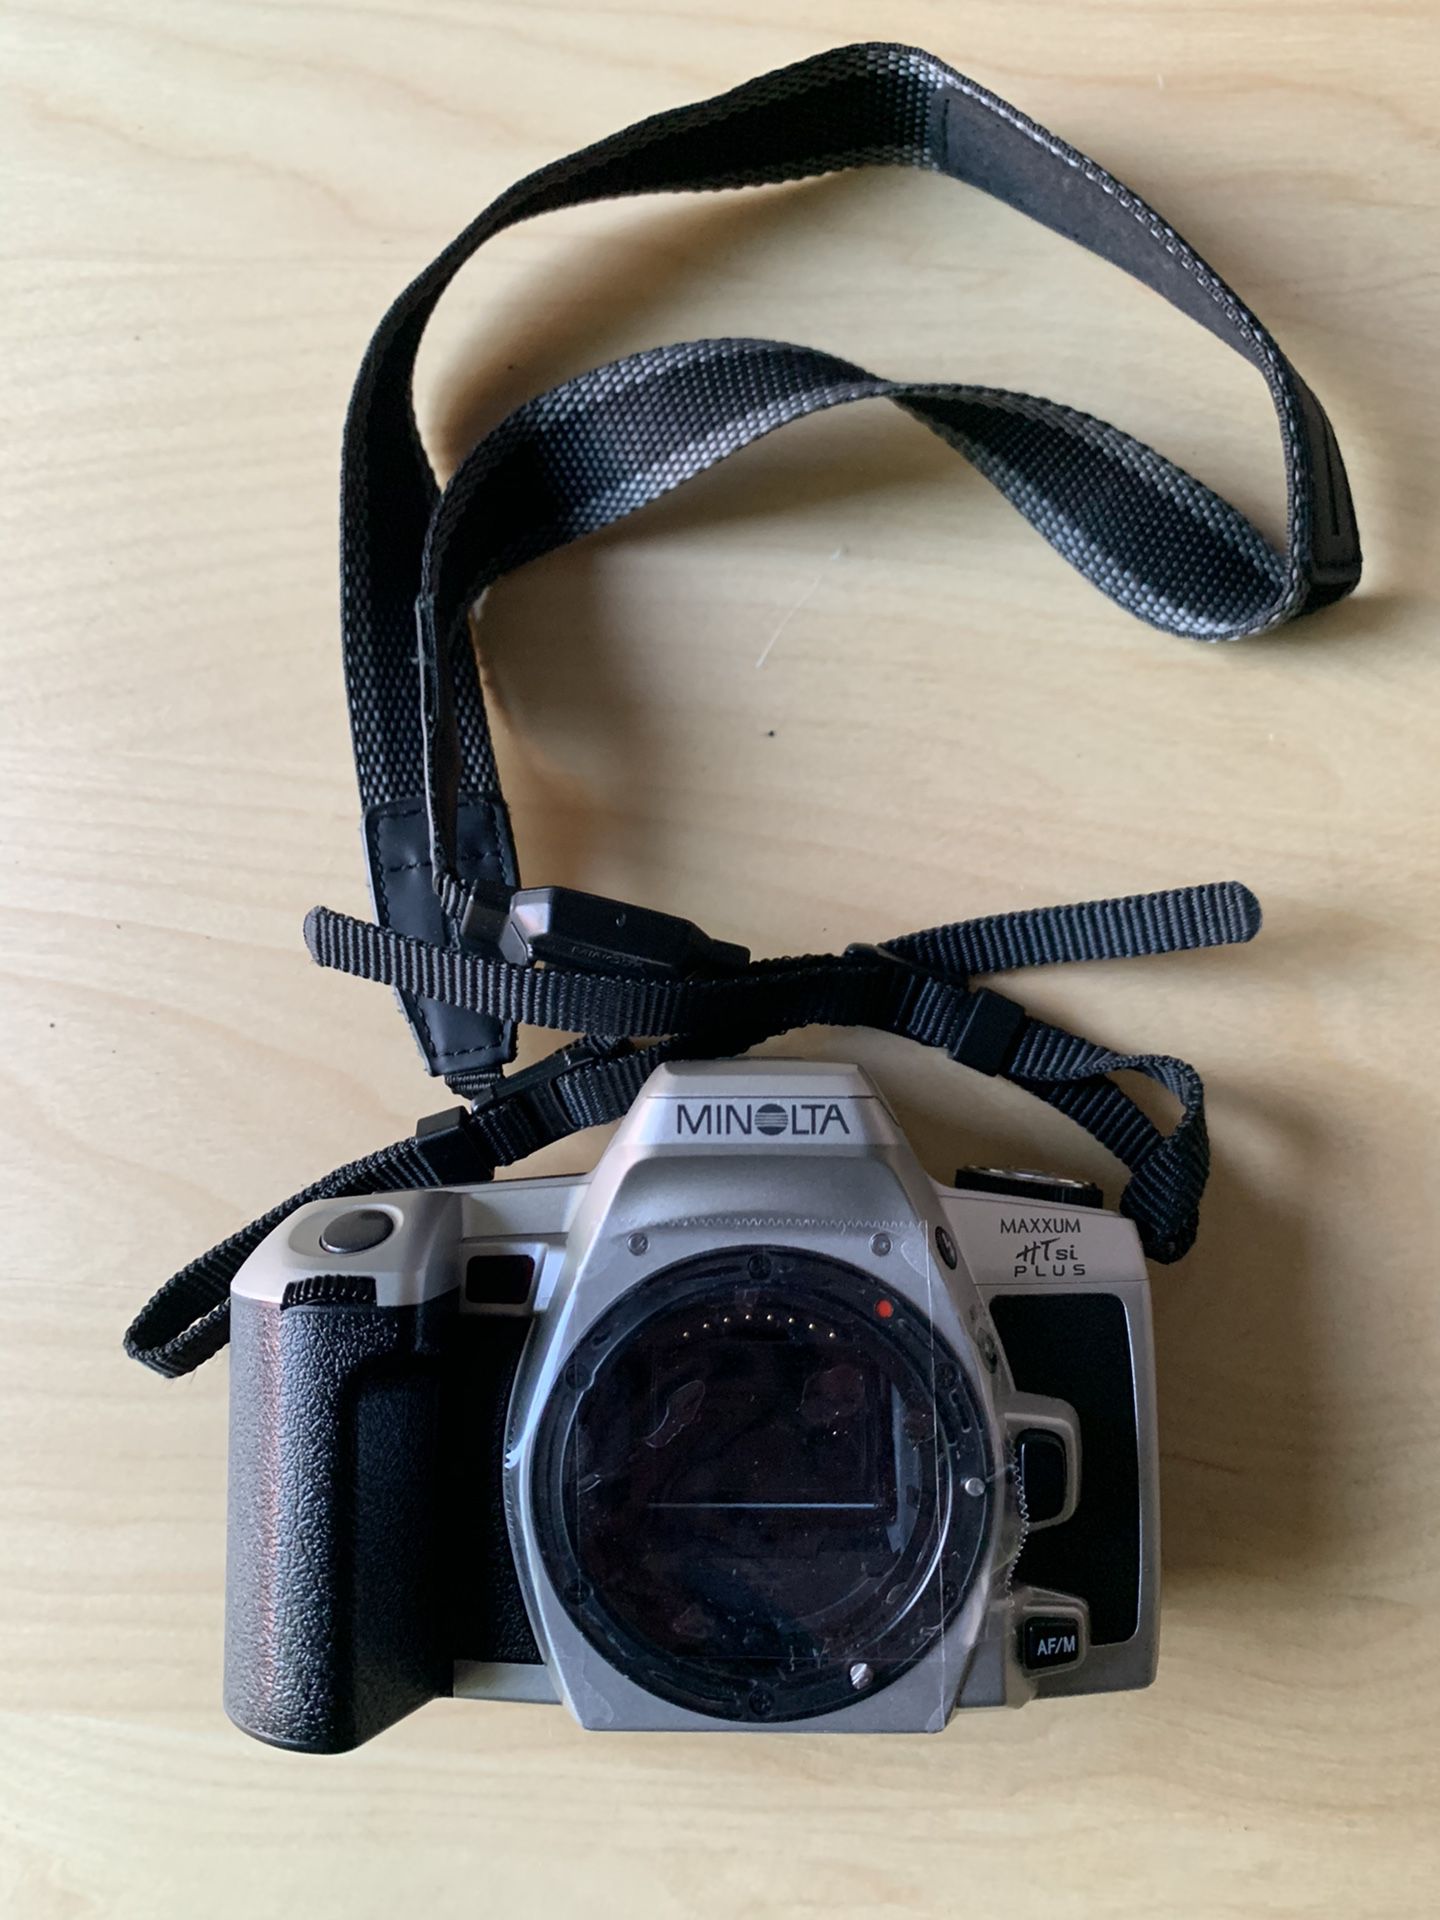 Minolta Maxxum HTsi Plus, 35mm film camera with strap